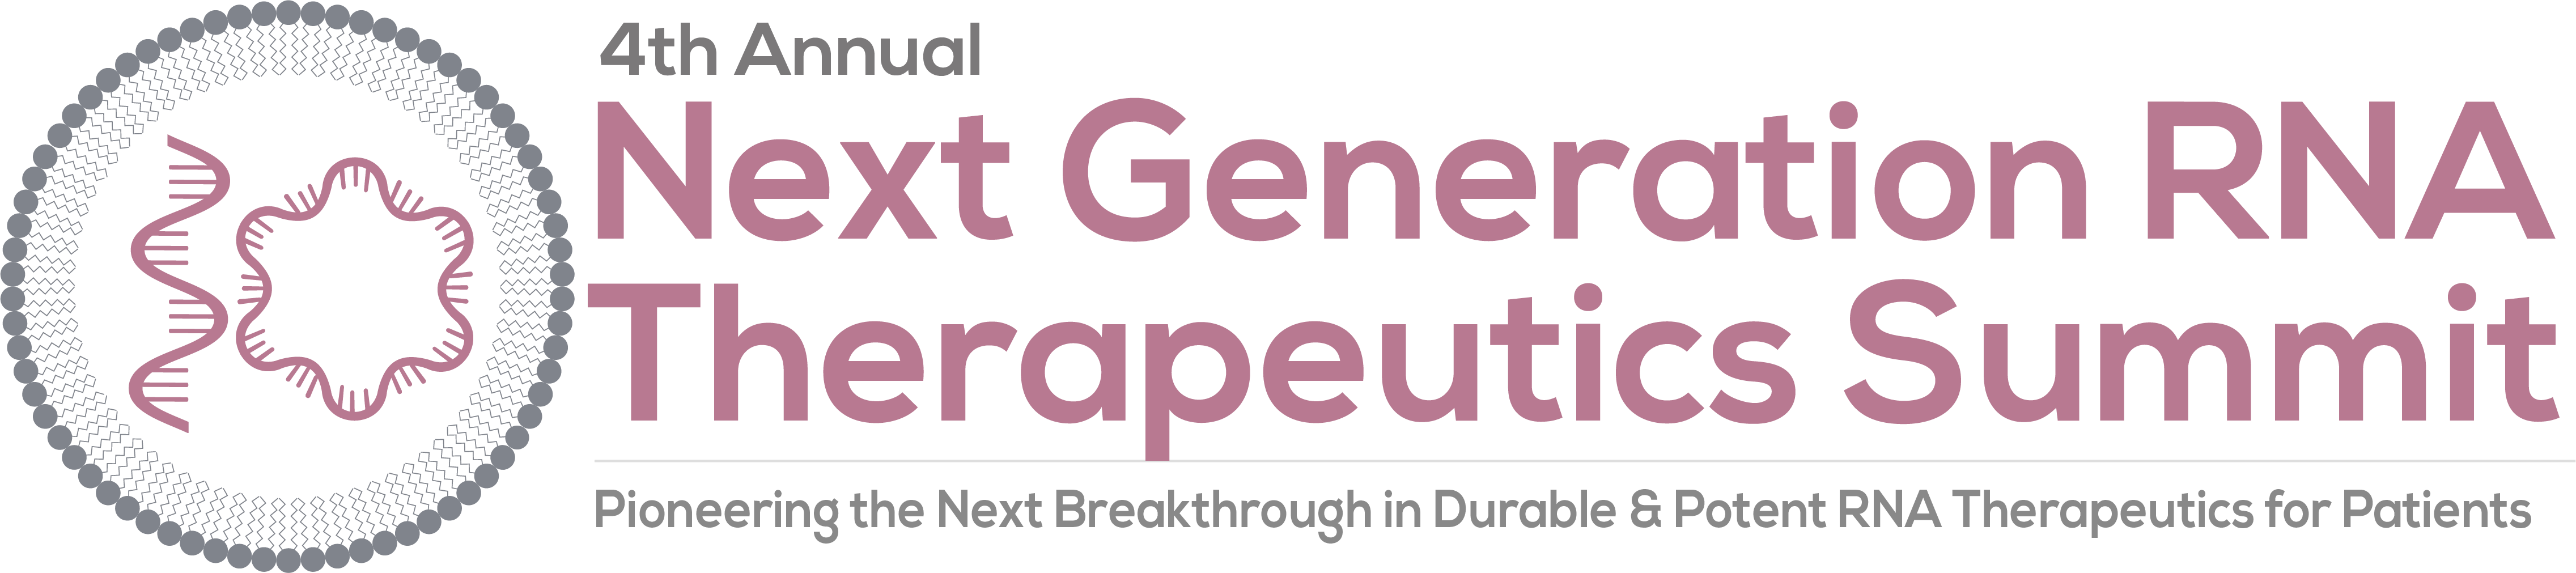 4th Next Generation RNA Summit logo